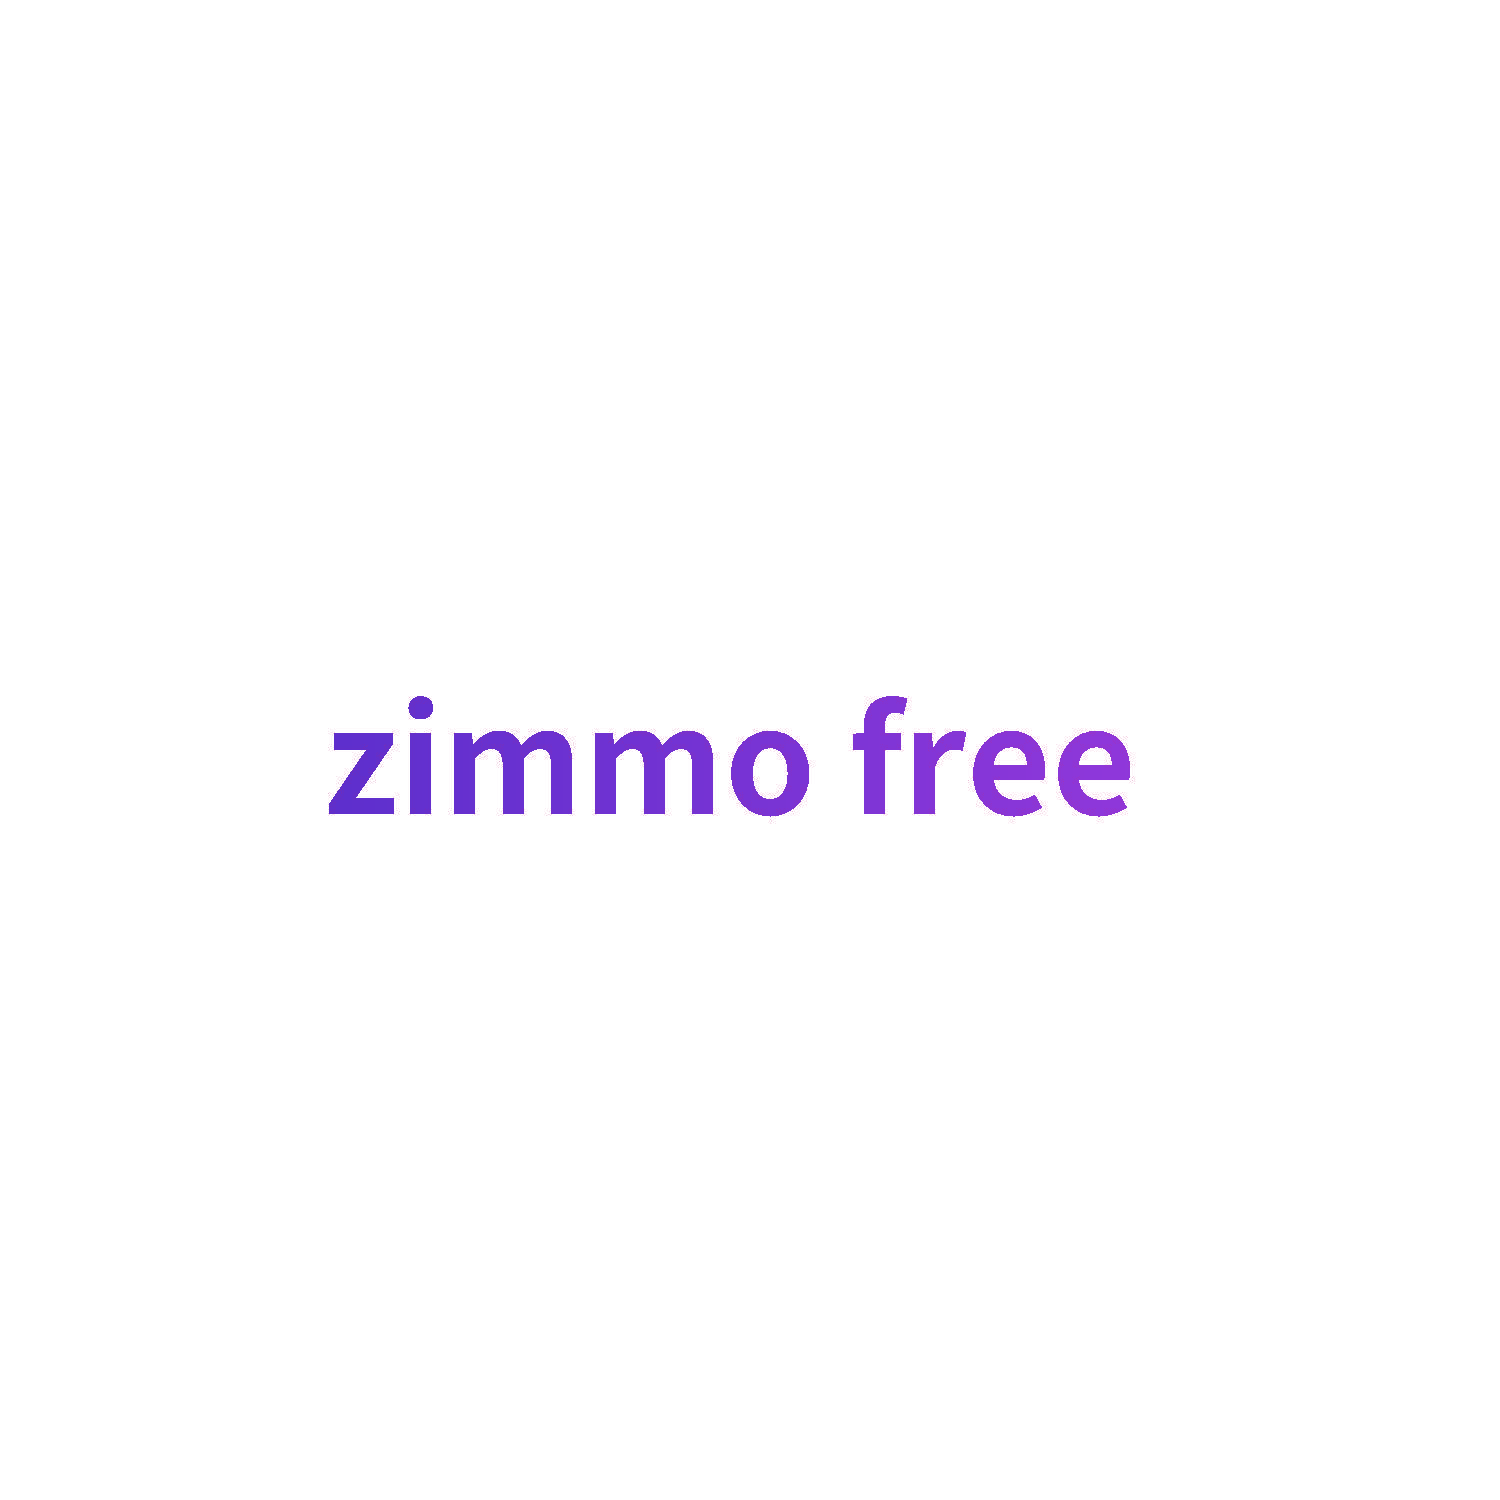 zimmo free